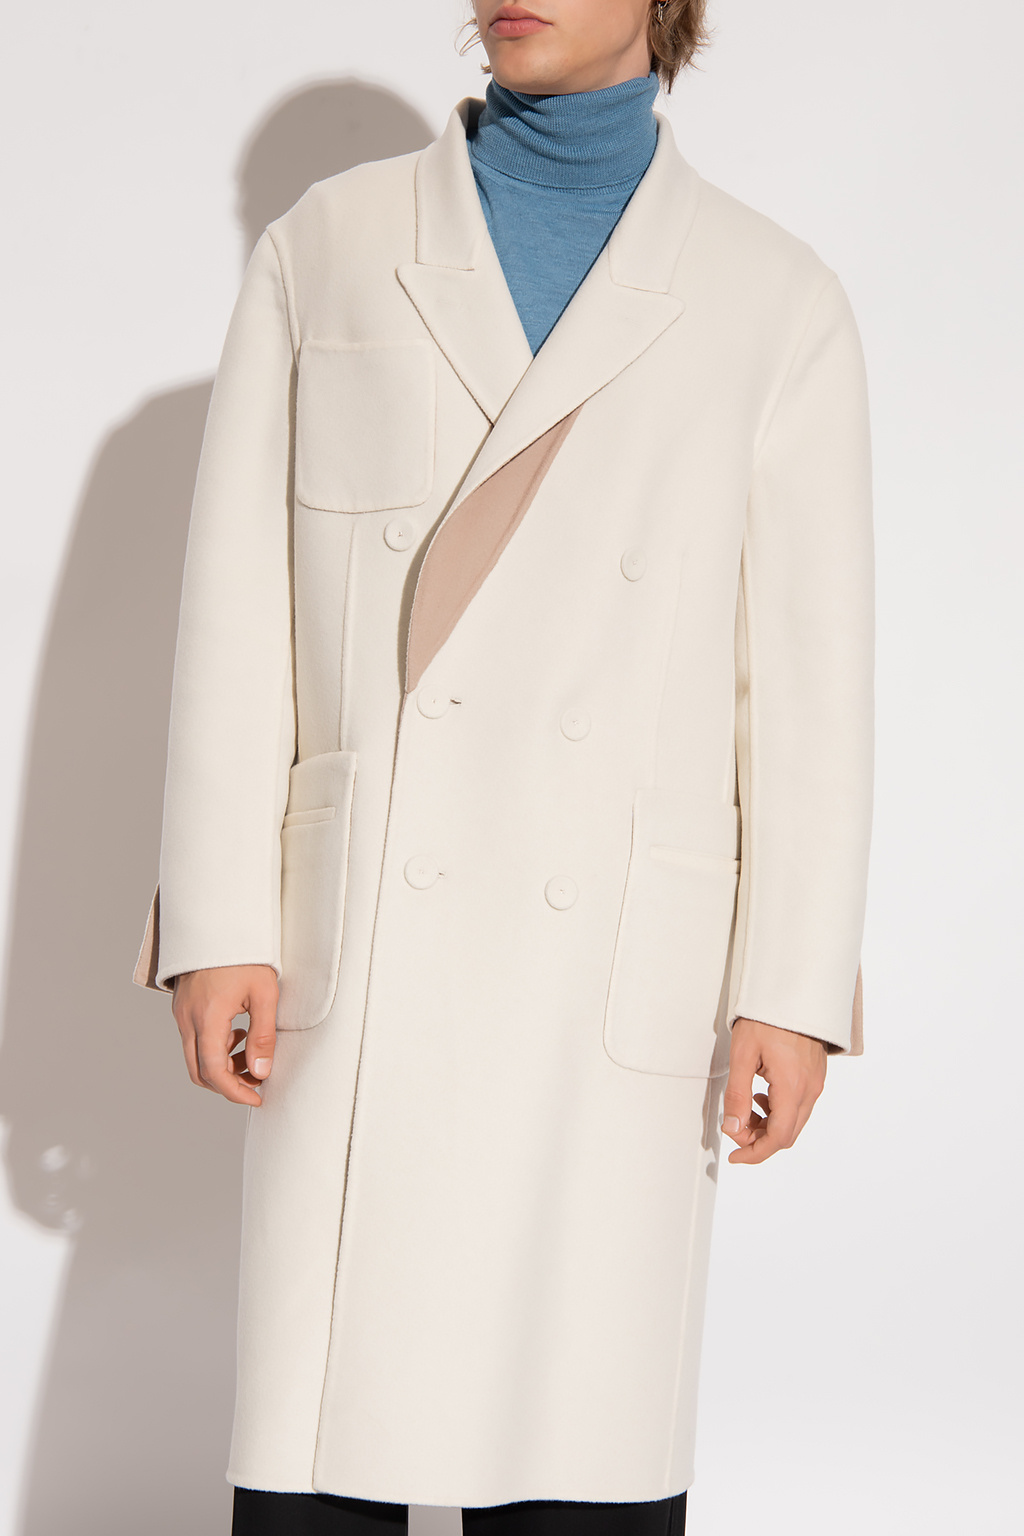 Fendi Cashmere coat | Men's Clothing | Vitkac